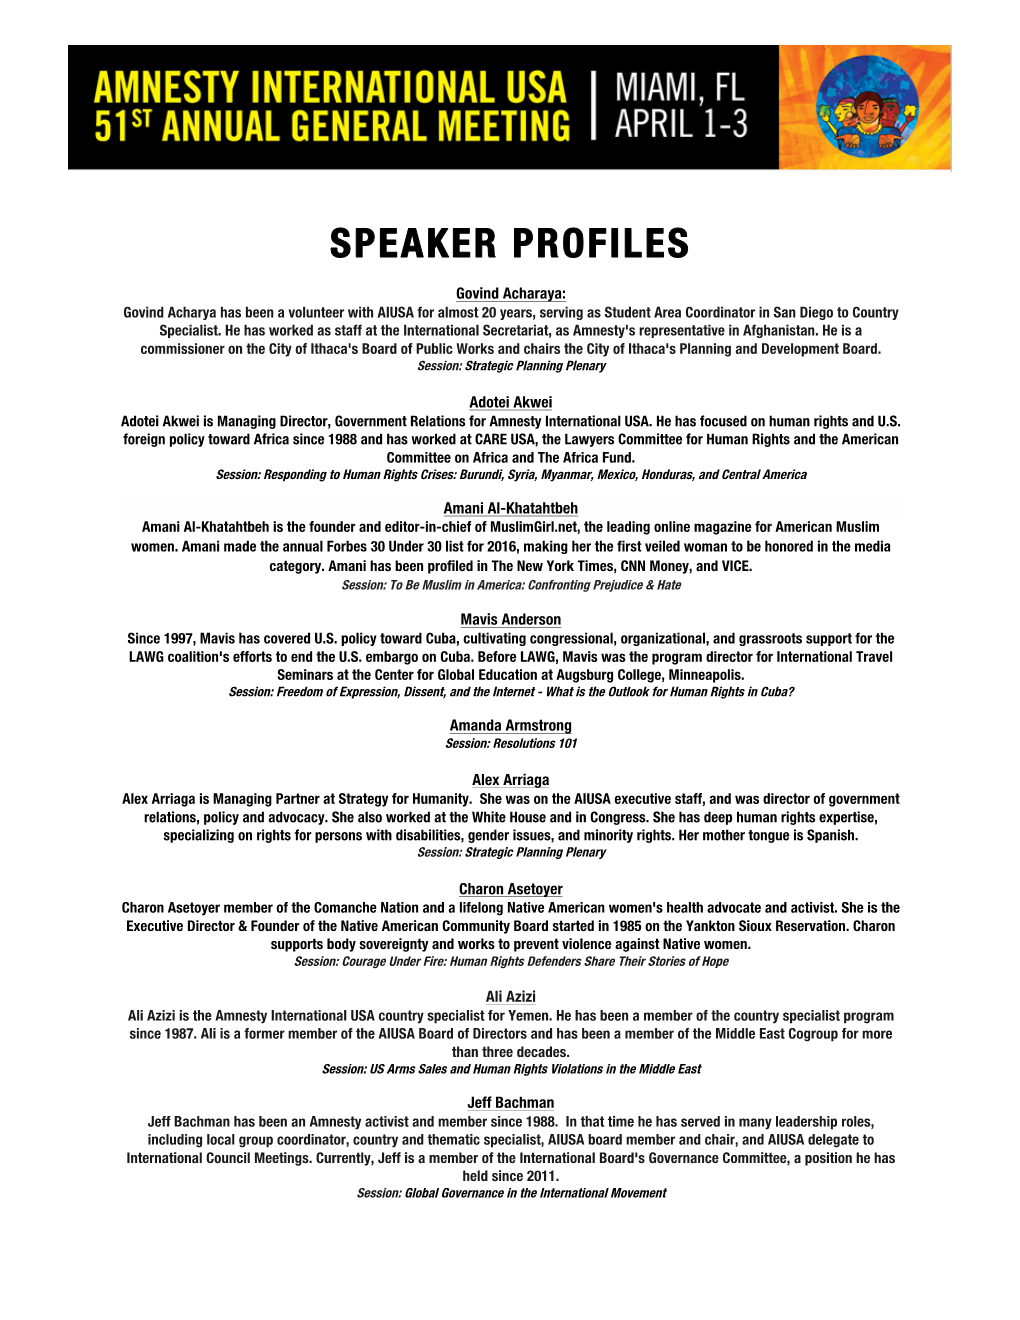 Speaker Profiles